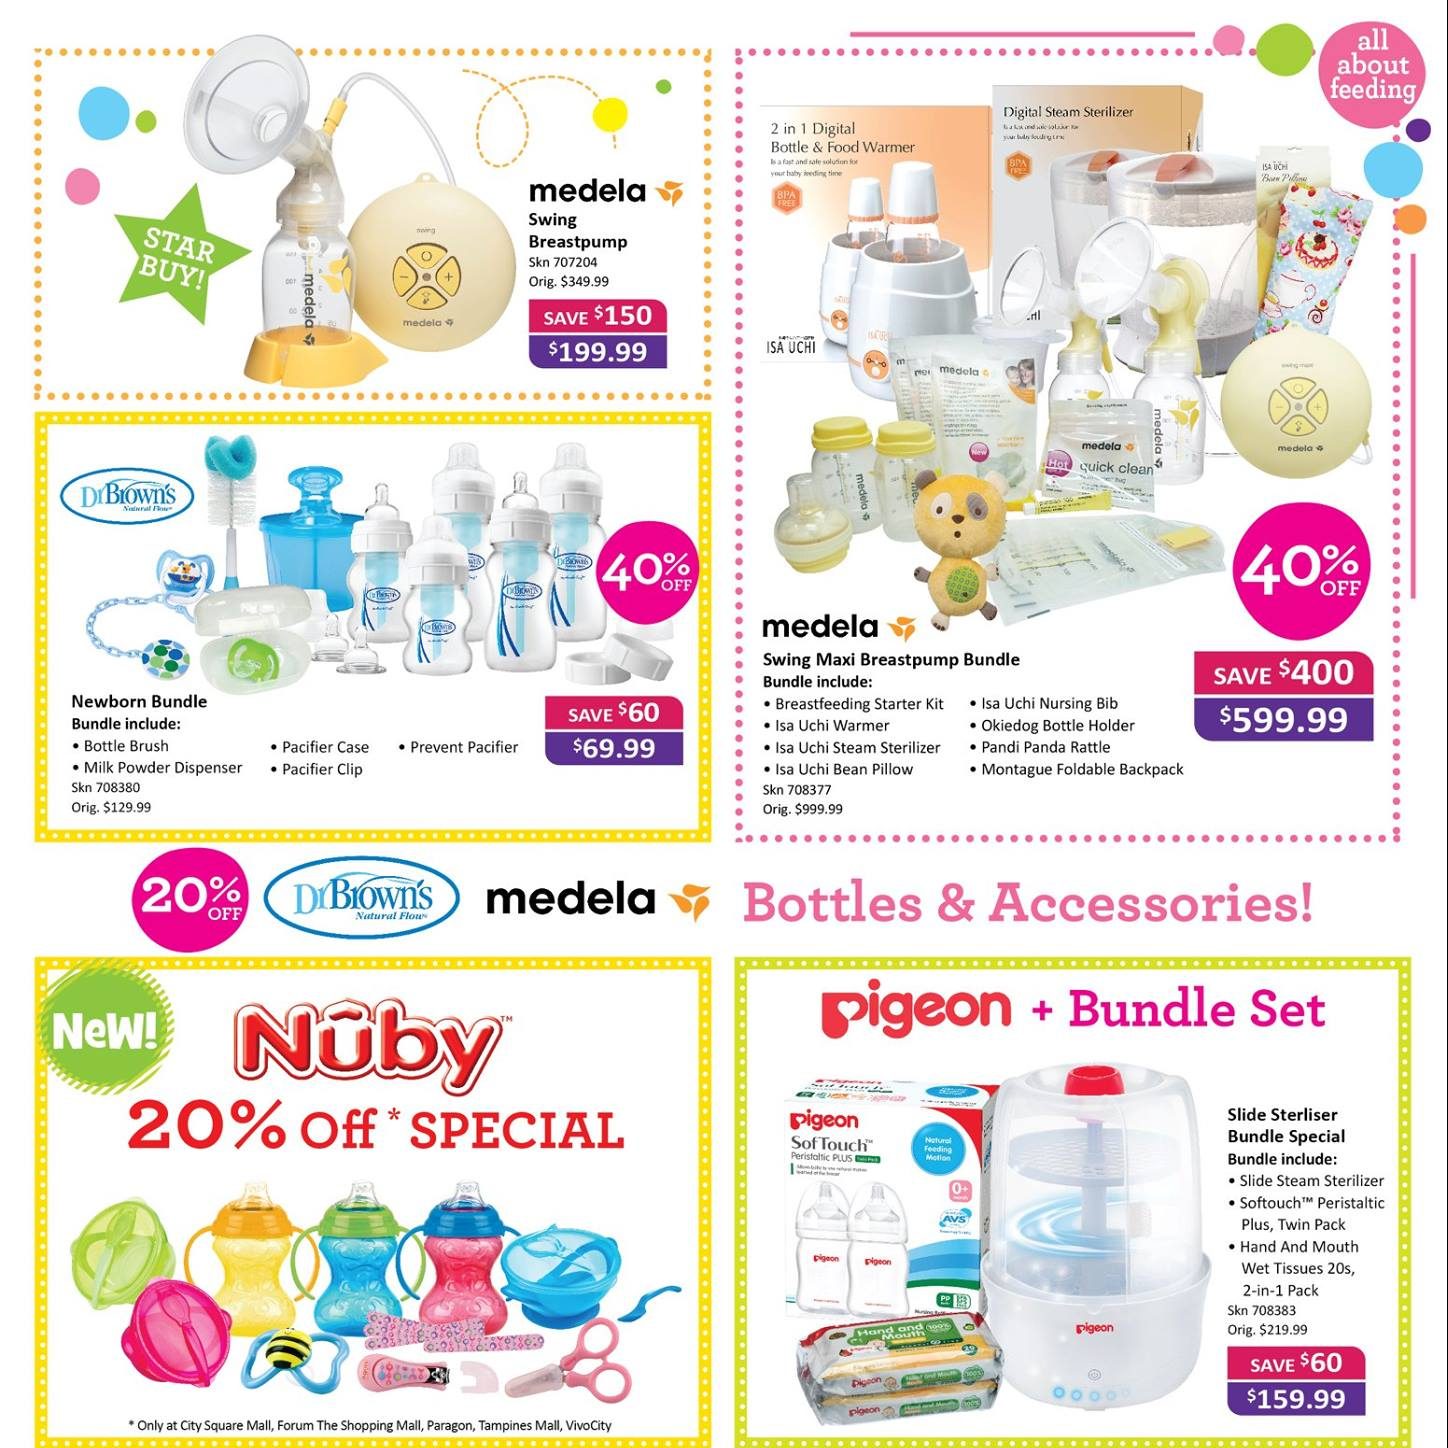 Toys “R” Us Singapore Save $400 on Medela Swing Maxi Breastpump Bundle Promotion ends 21 Aug 2016